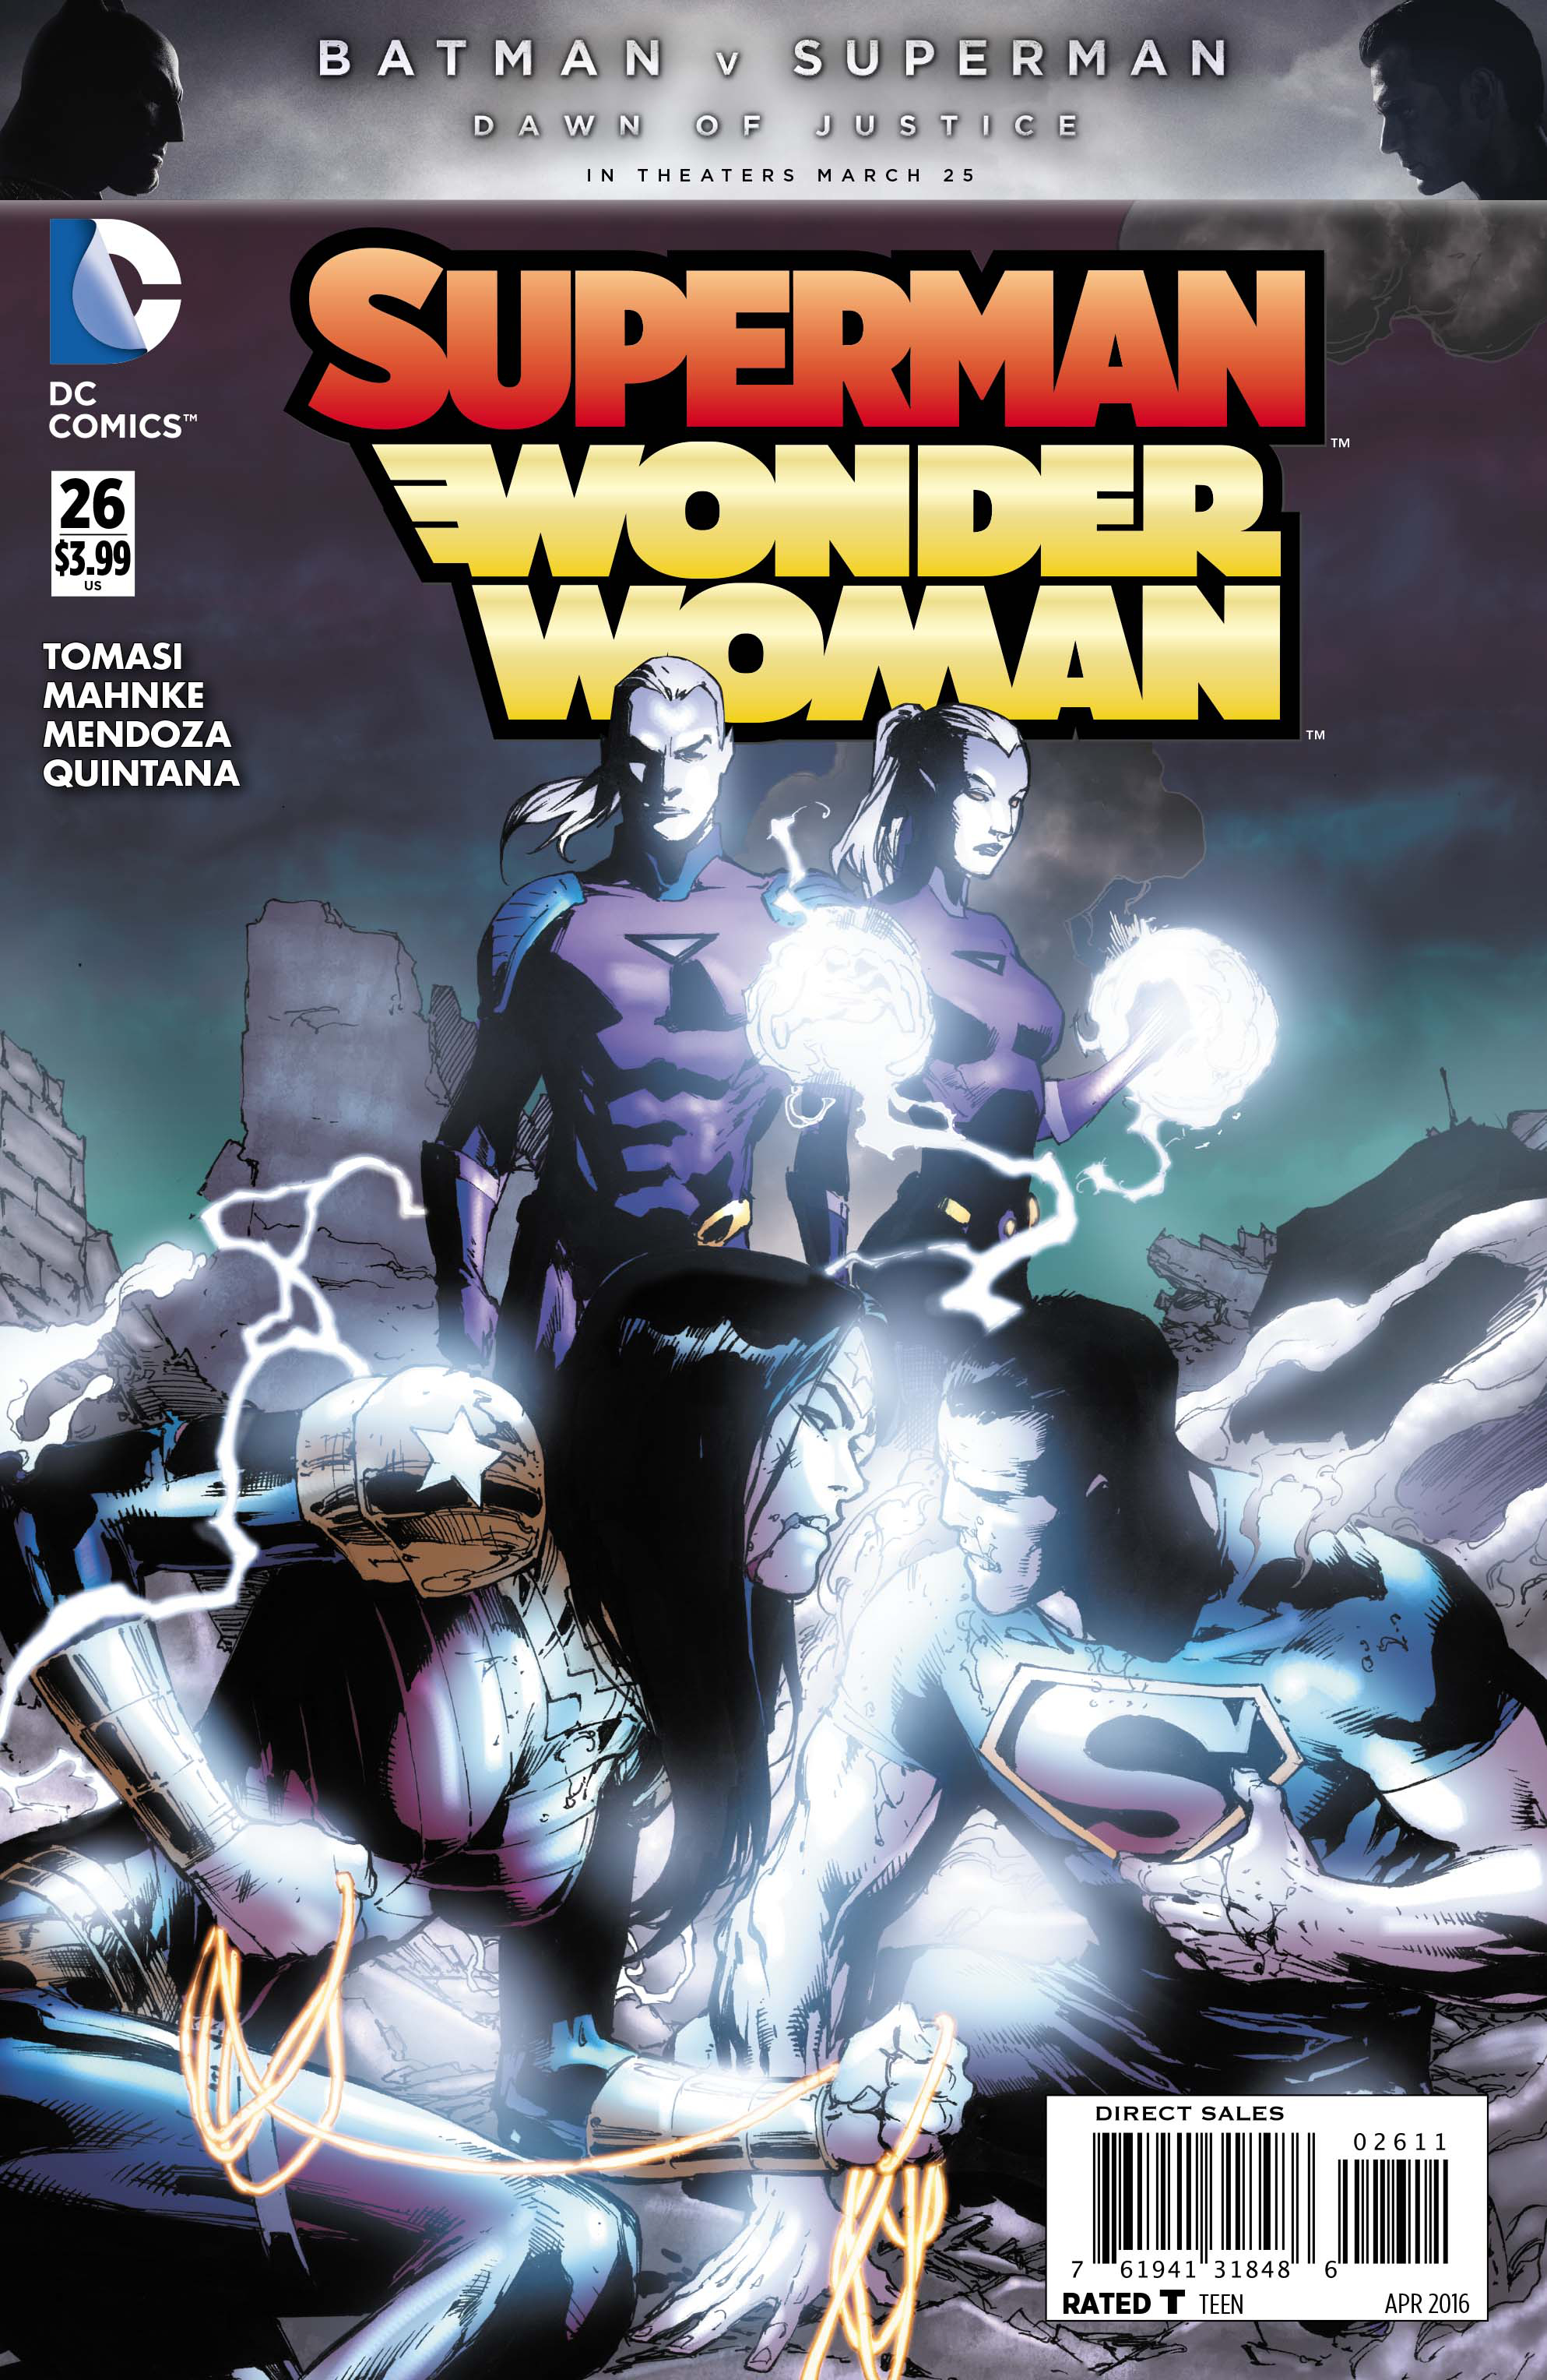 SUPERMAN WONDER WOMAN #26